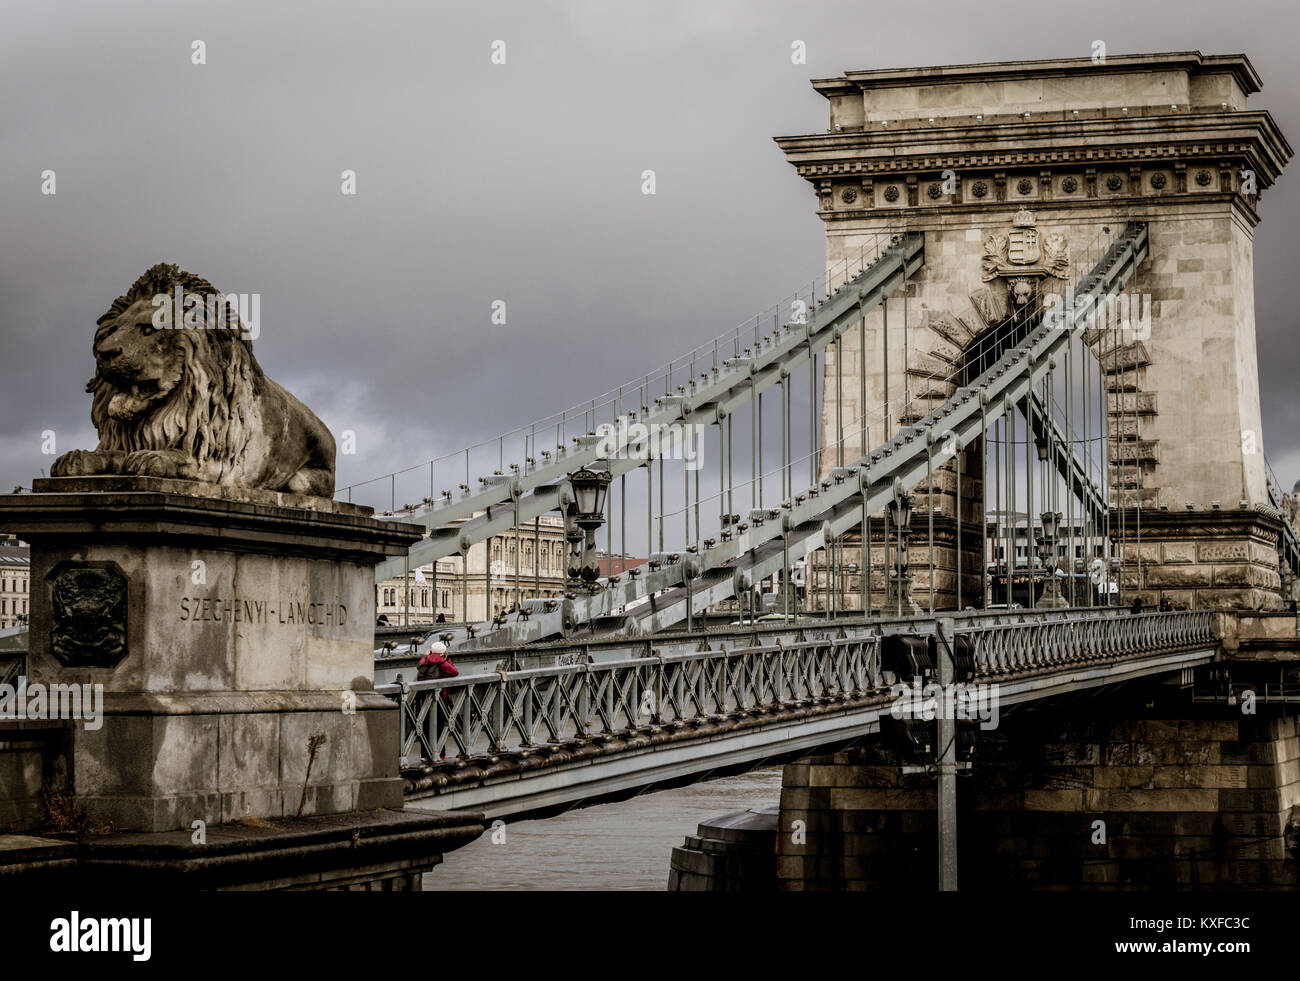 Széchenyi Lánchíd, Kettenbrücke mit eine Löwenstatue am Brückenkopf, Donau, Budapest, Ungarn, Europa Stockfoto